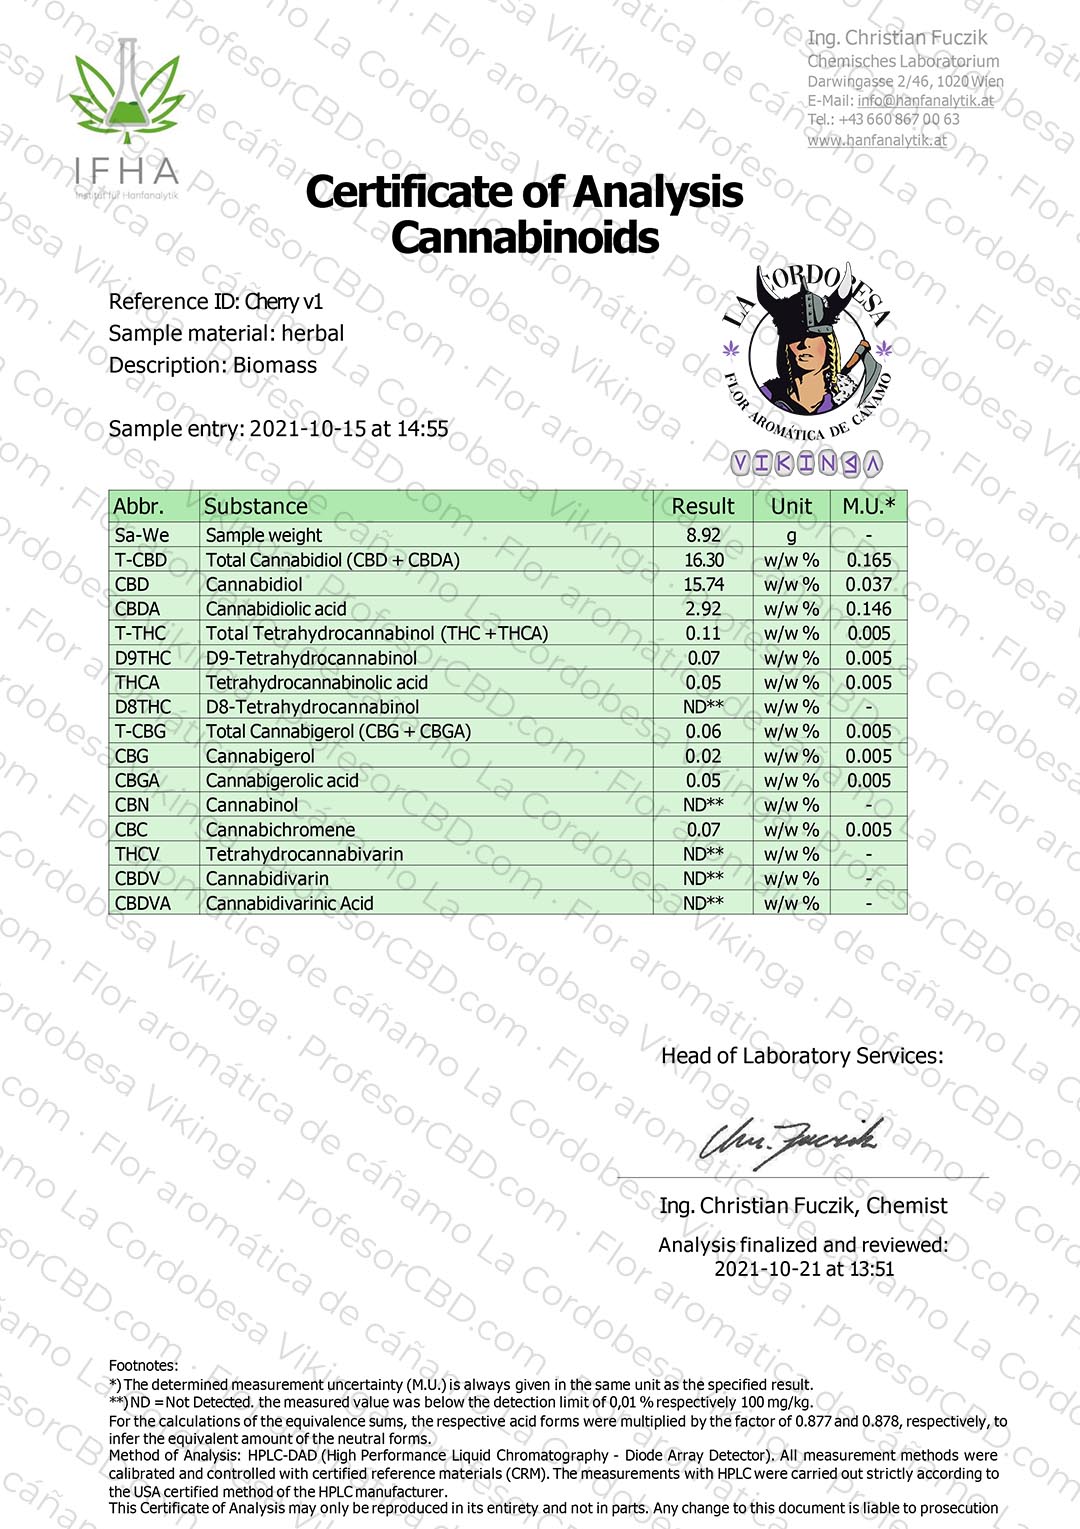 CBD Aromatic Flower Bud at 16.30% La Cordobesa Vikinga